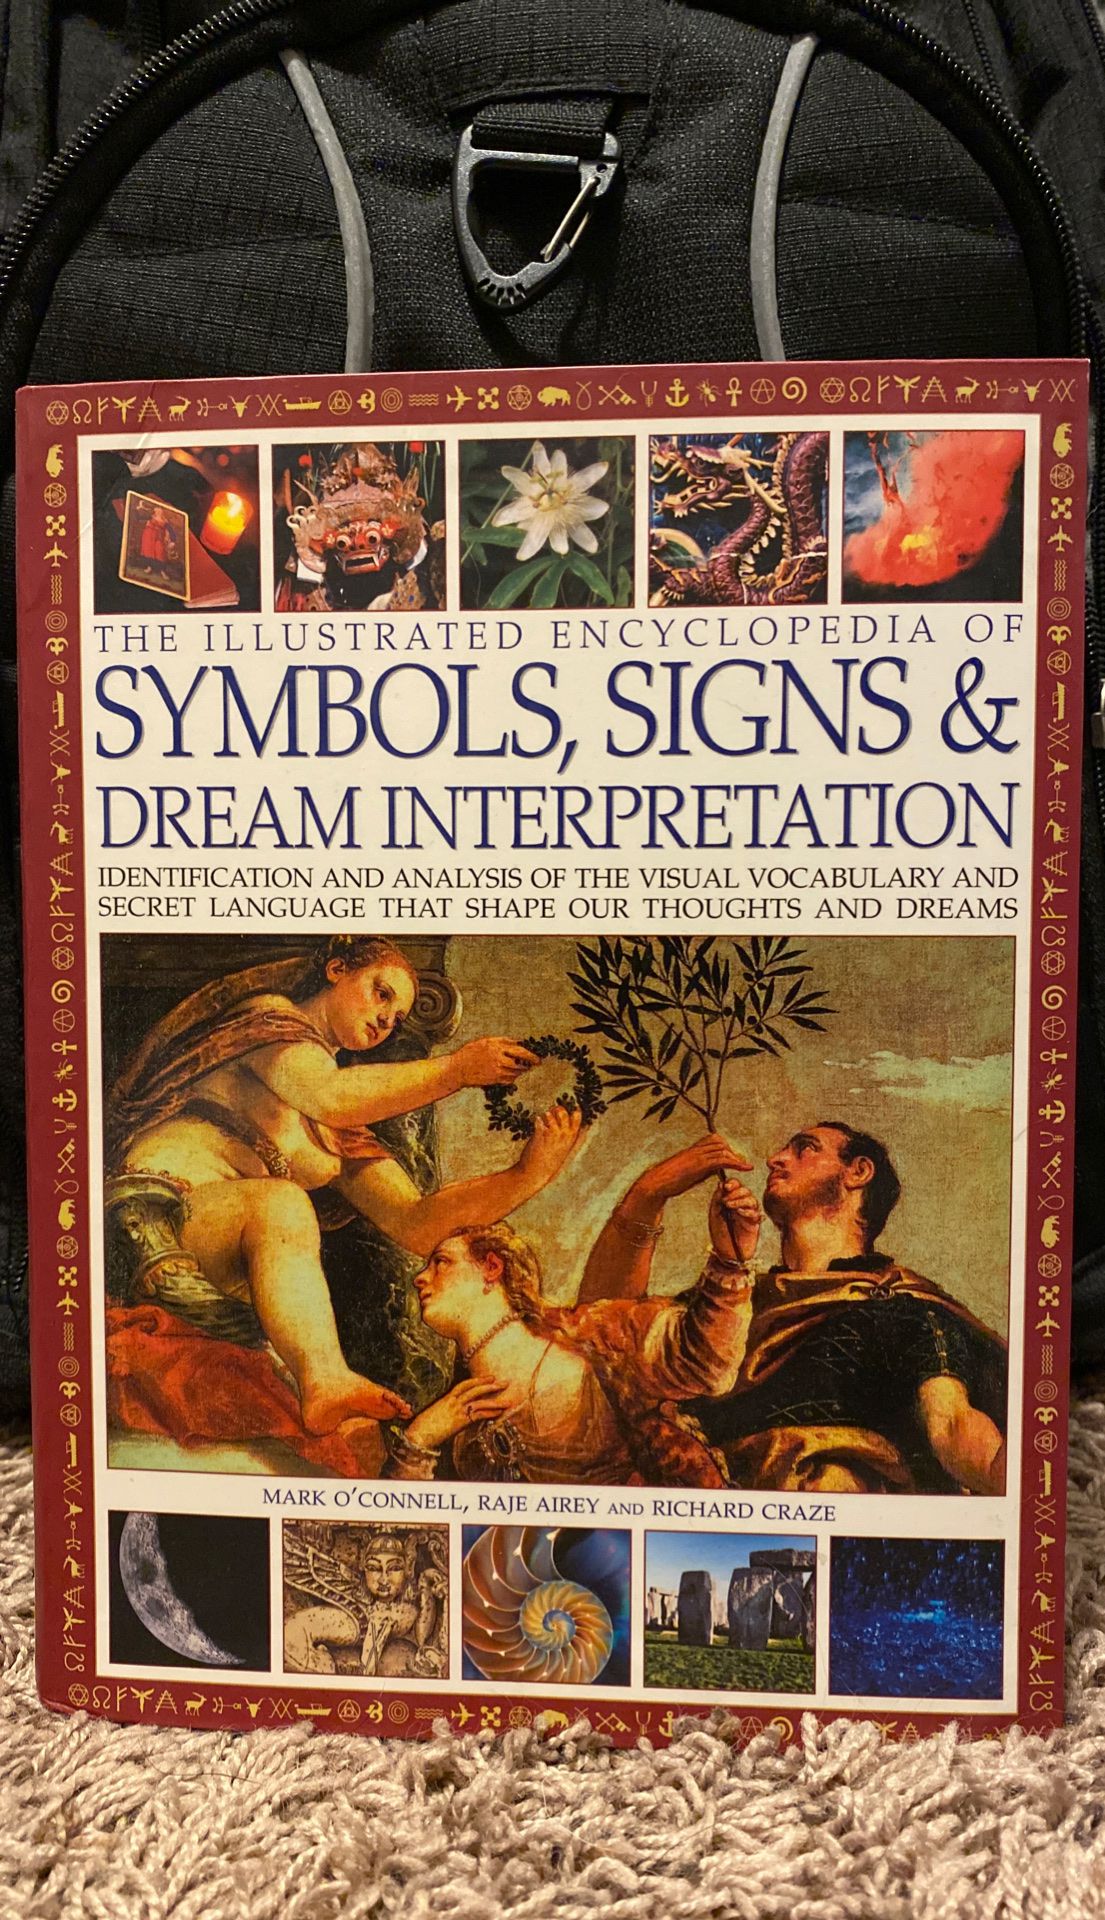 Dream Interpretation Book